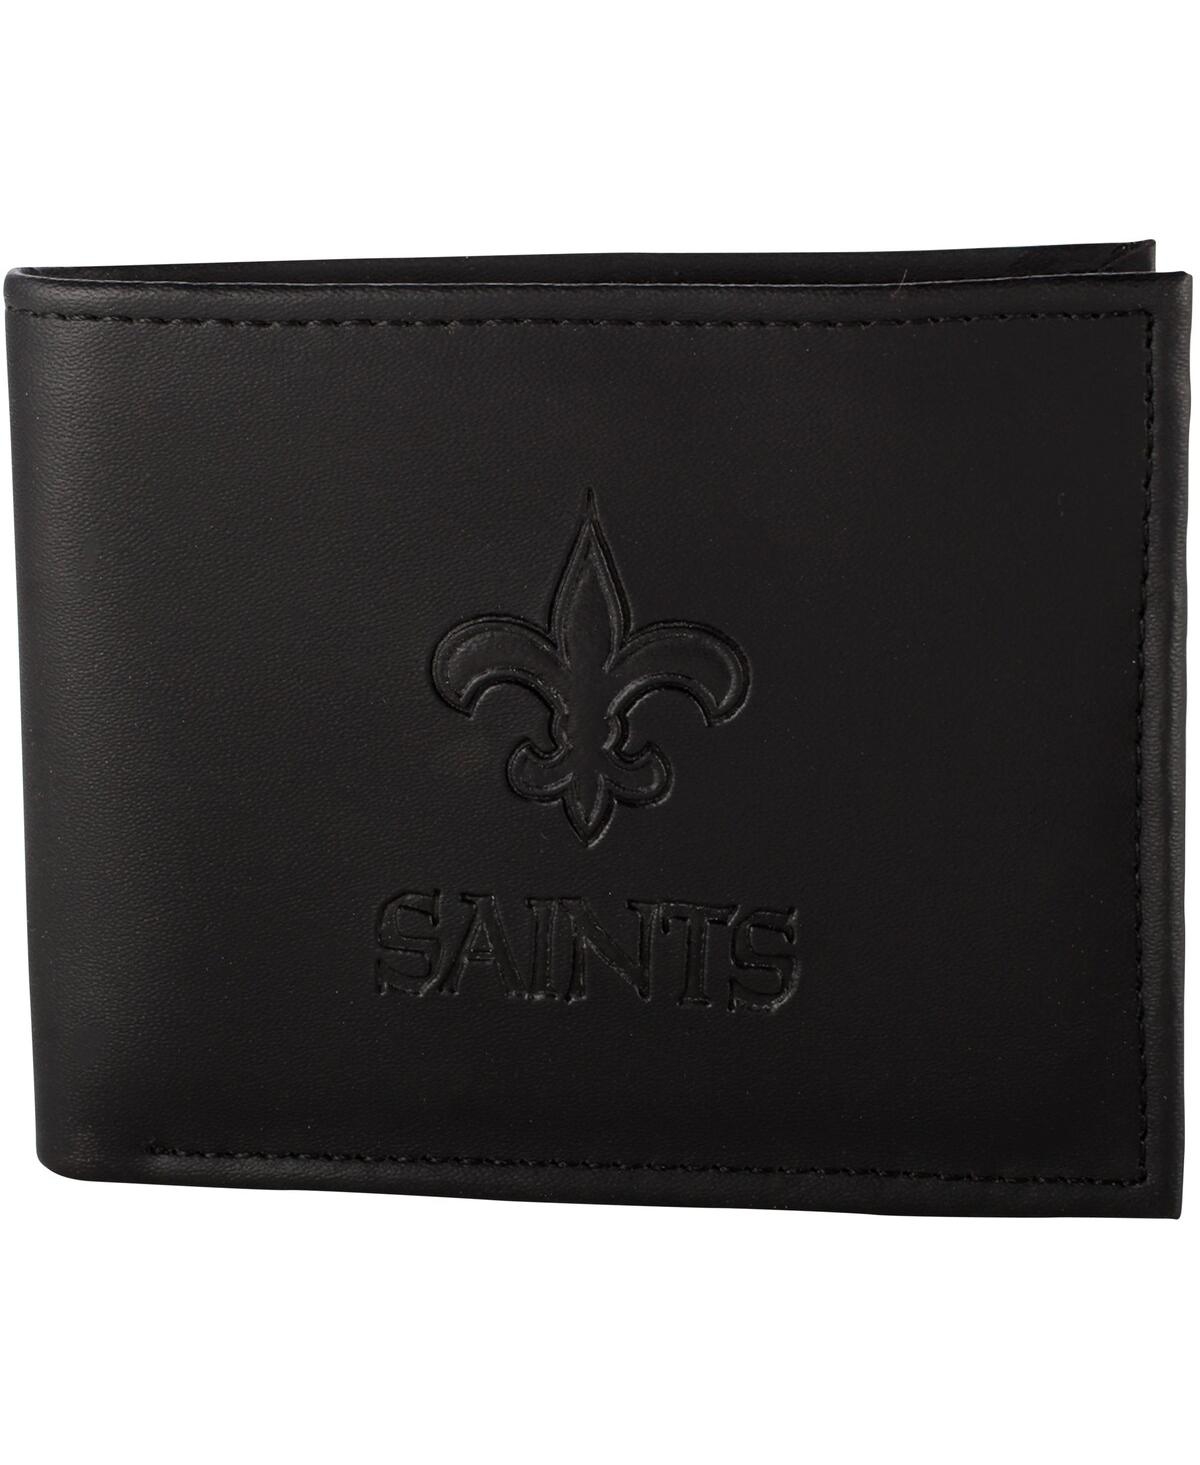 Shop Evergreen Enterprises Men's Black New Orleans Saints Hybrid Bi-fold Wallet